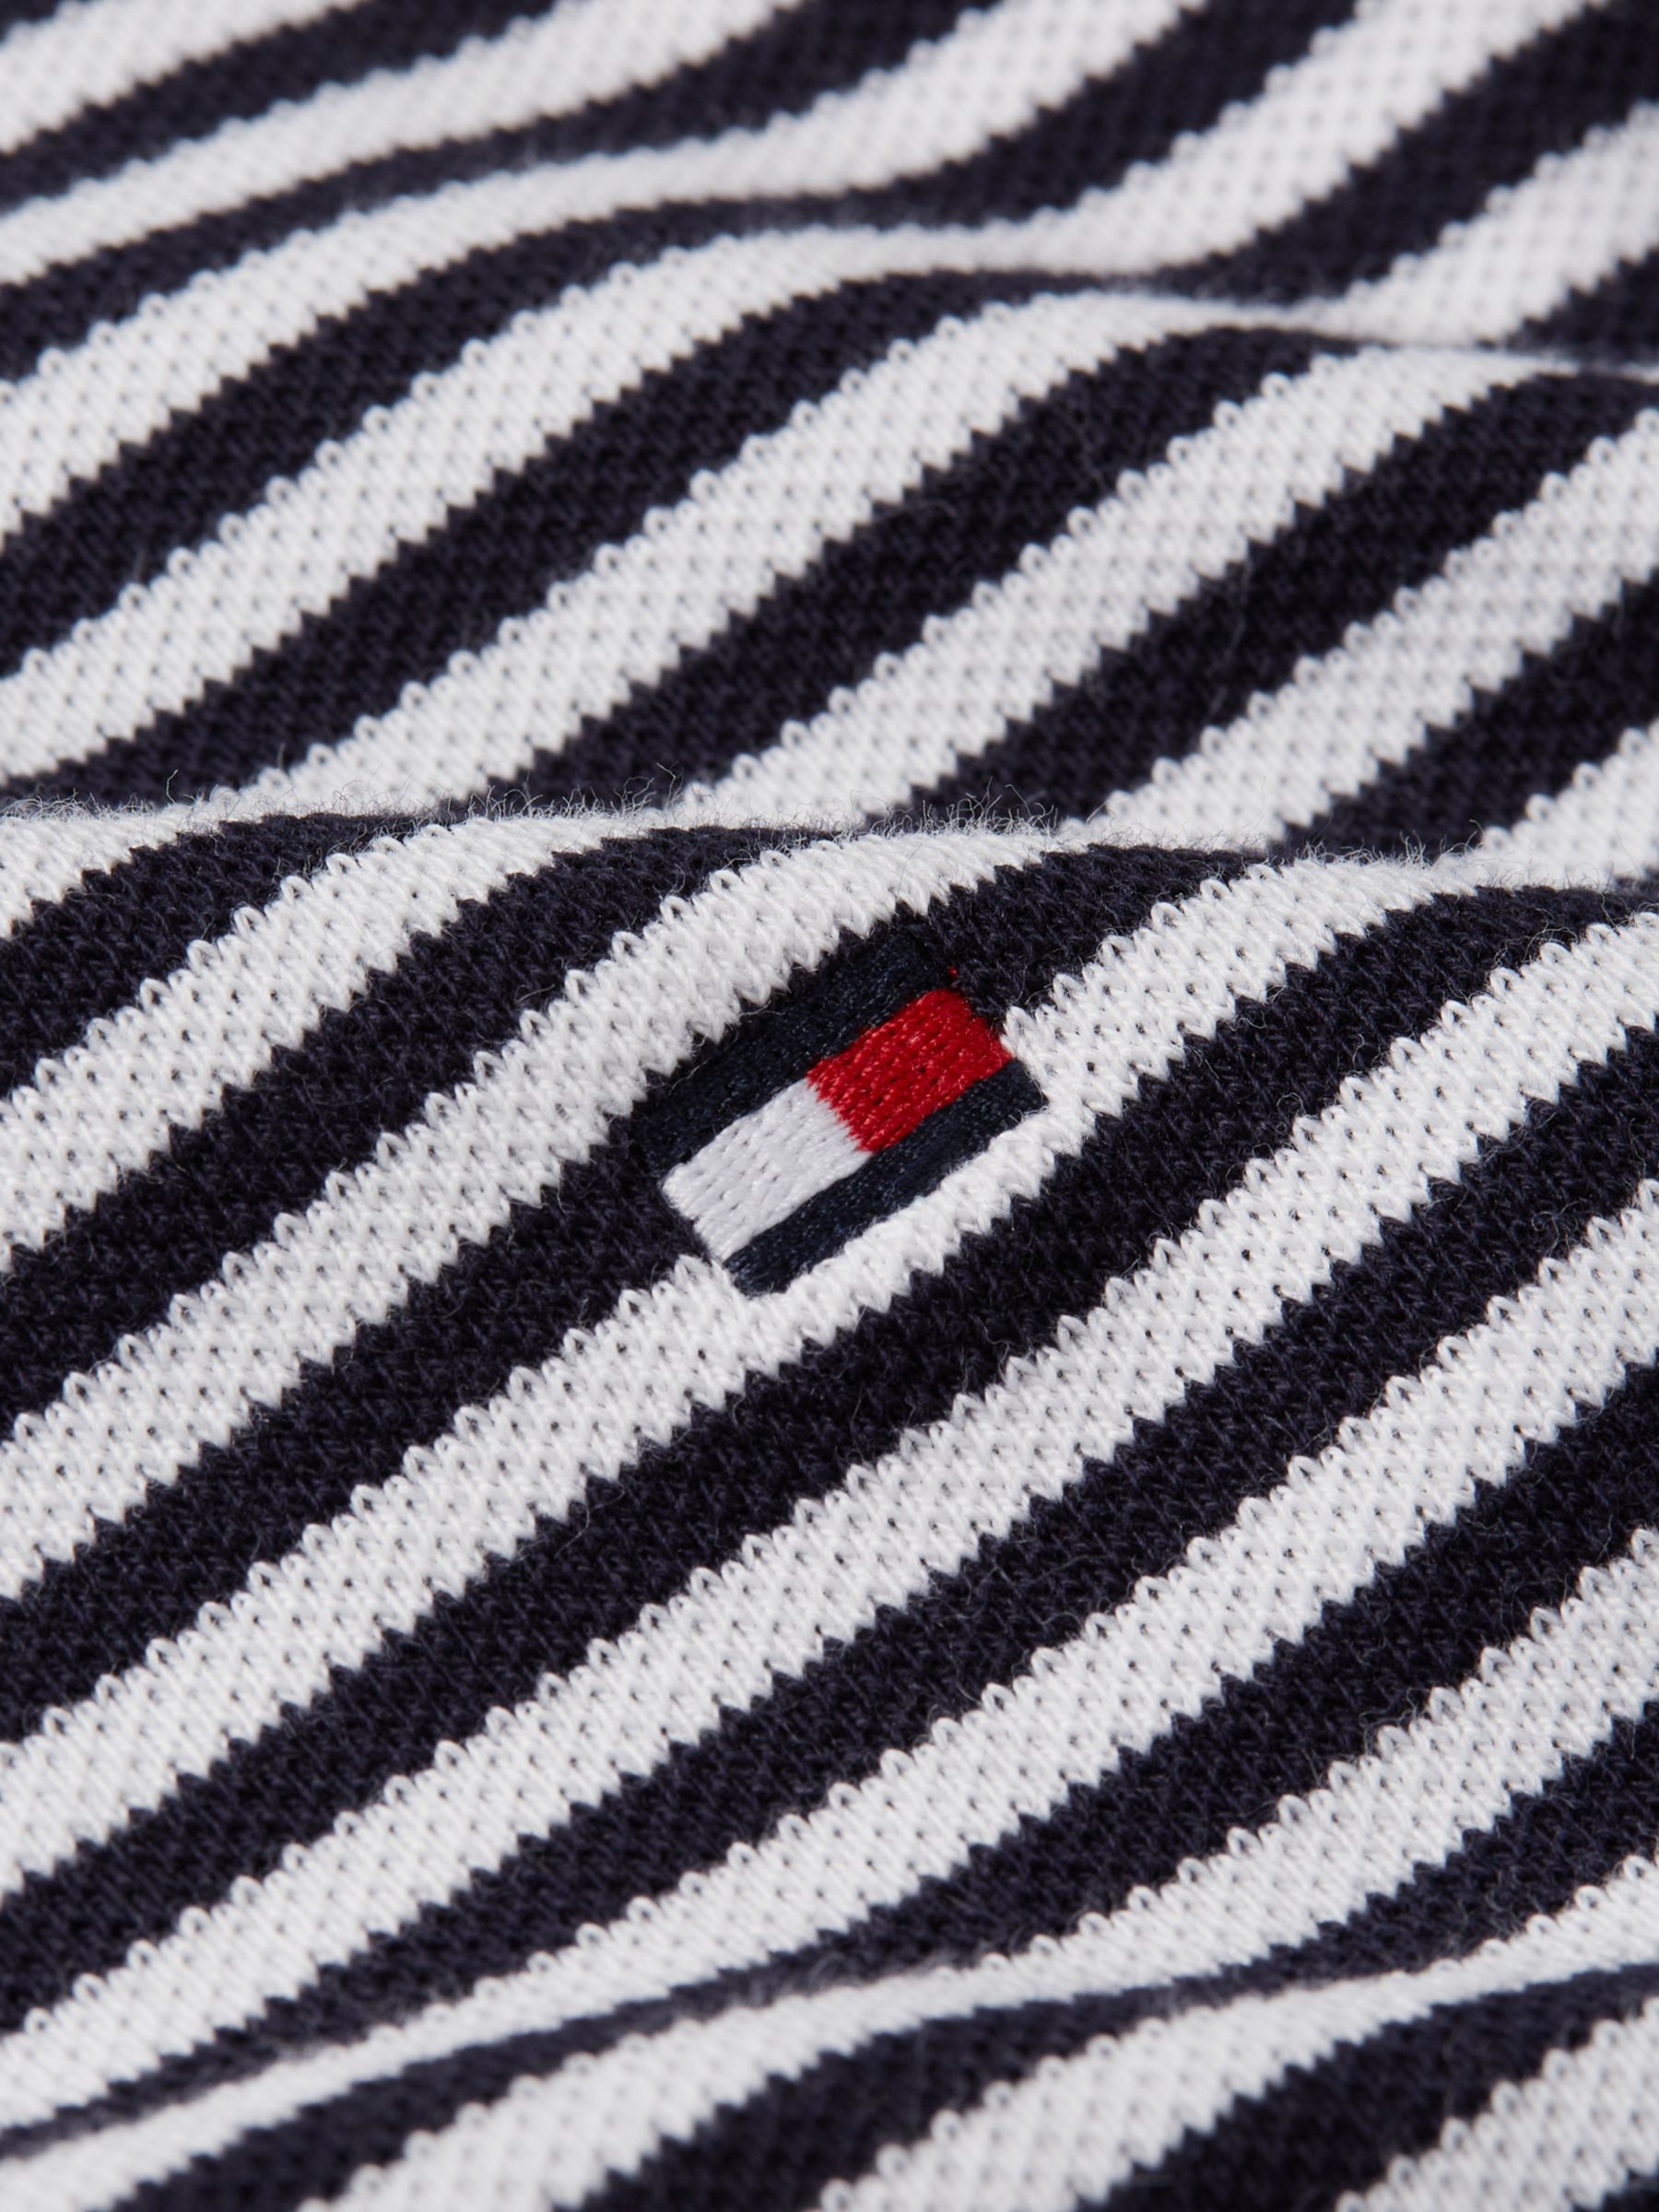 Buy Tommy Hilfiger 1985 Short Sleeve Stripe Polo Shirt, Desert Sky/White Online at johnlewis.com